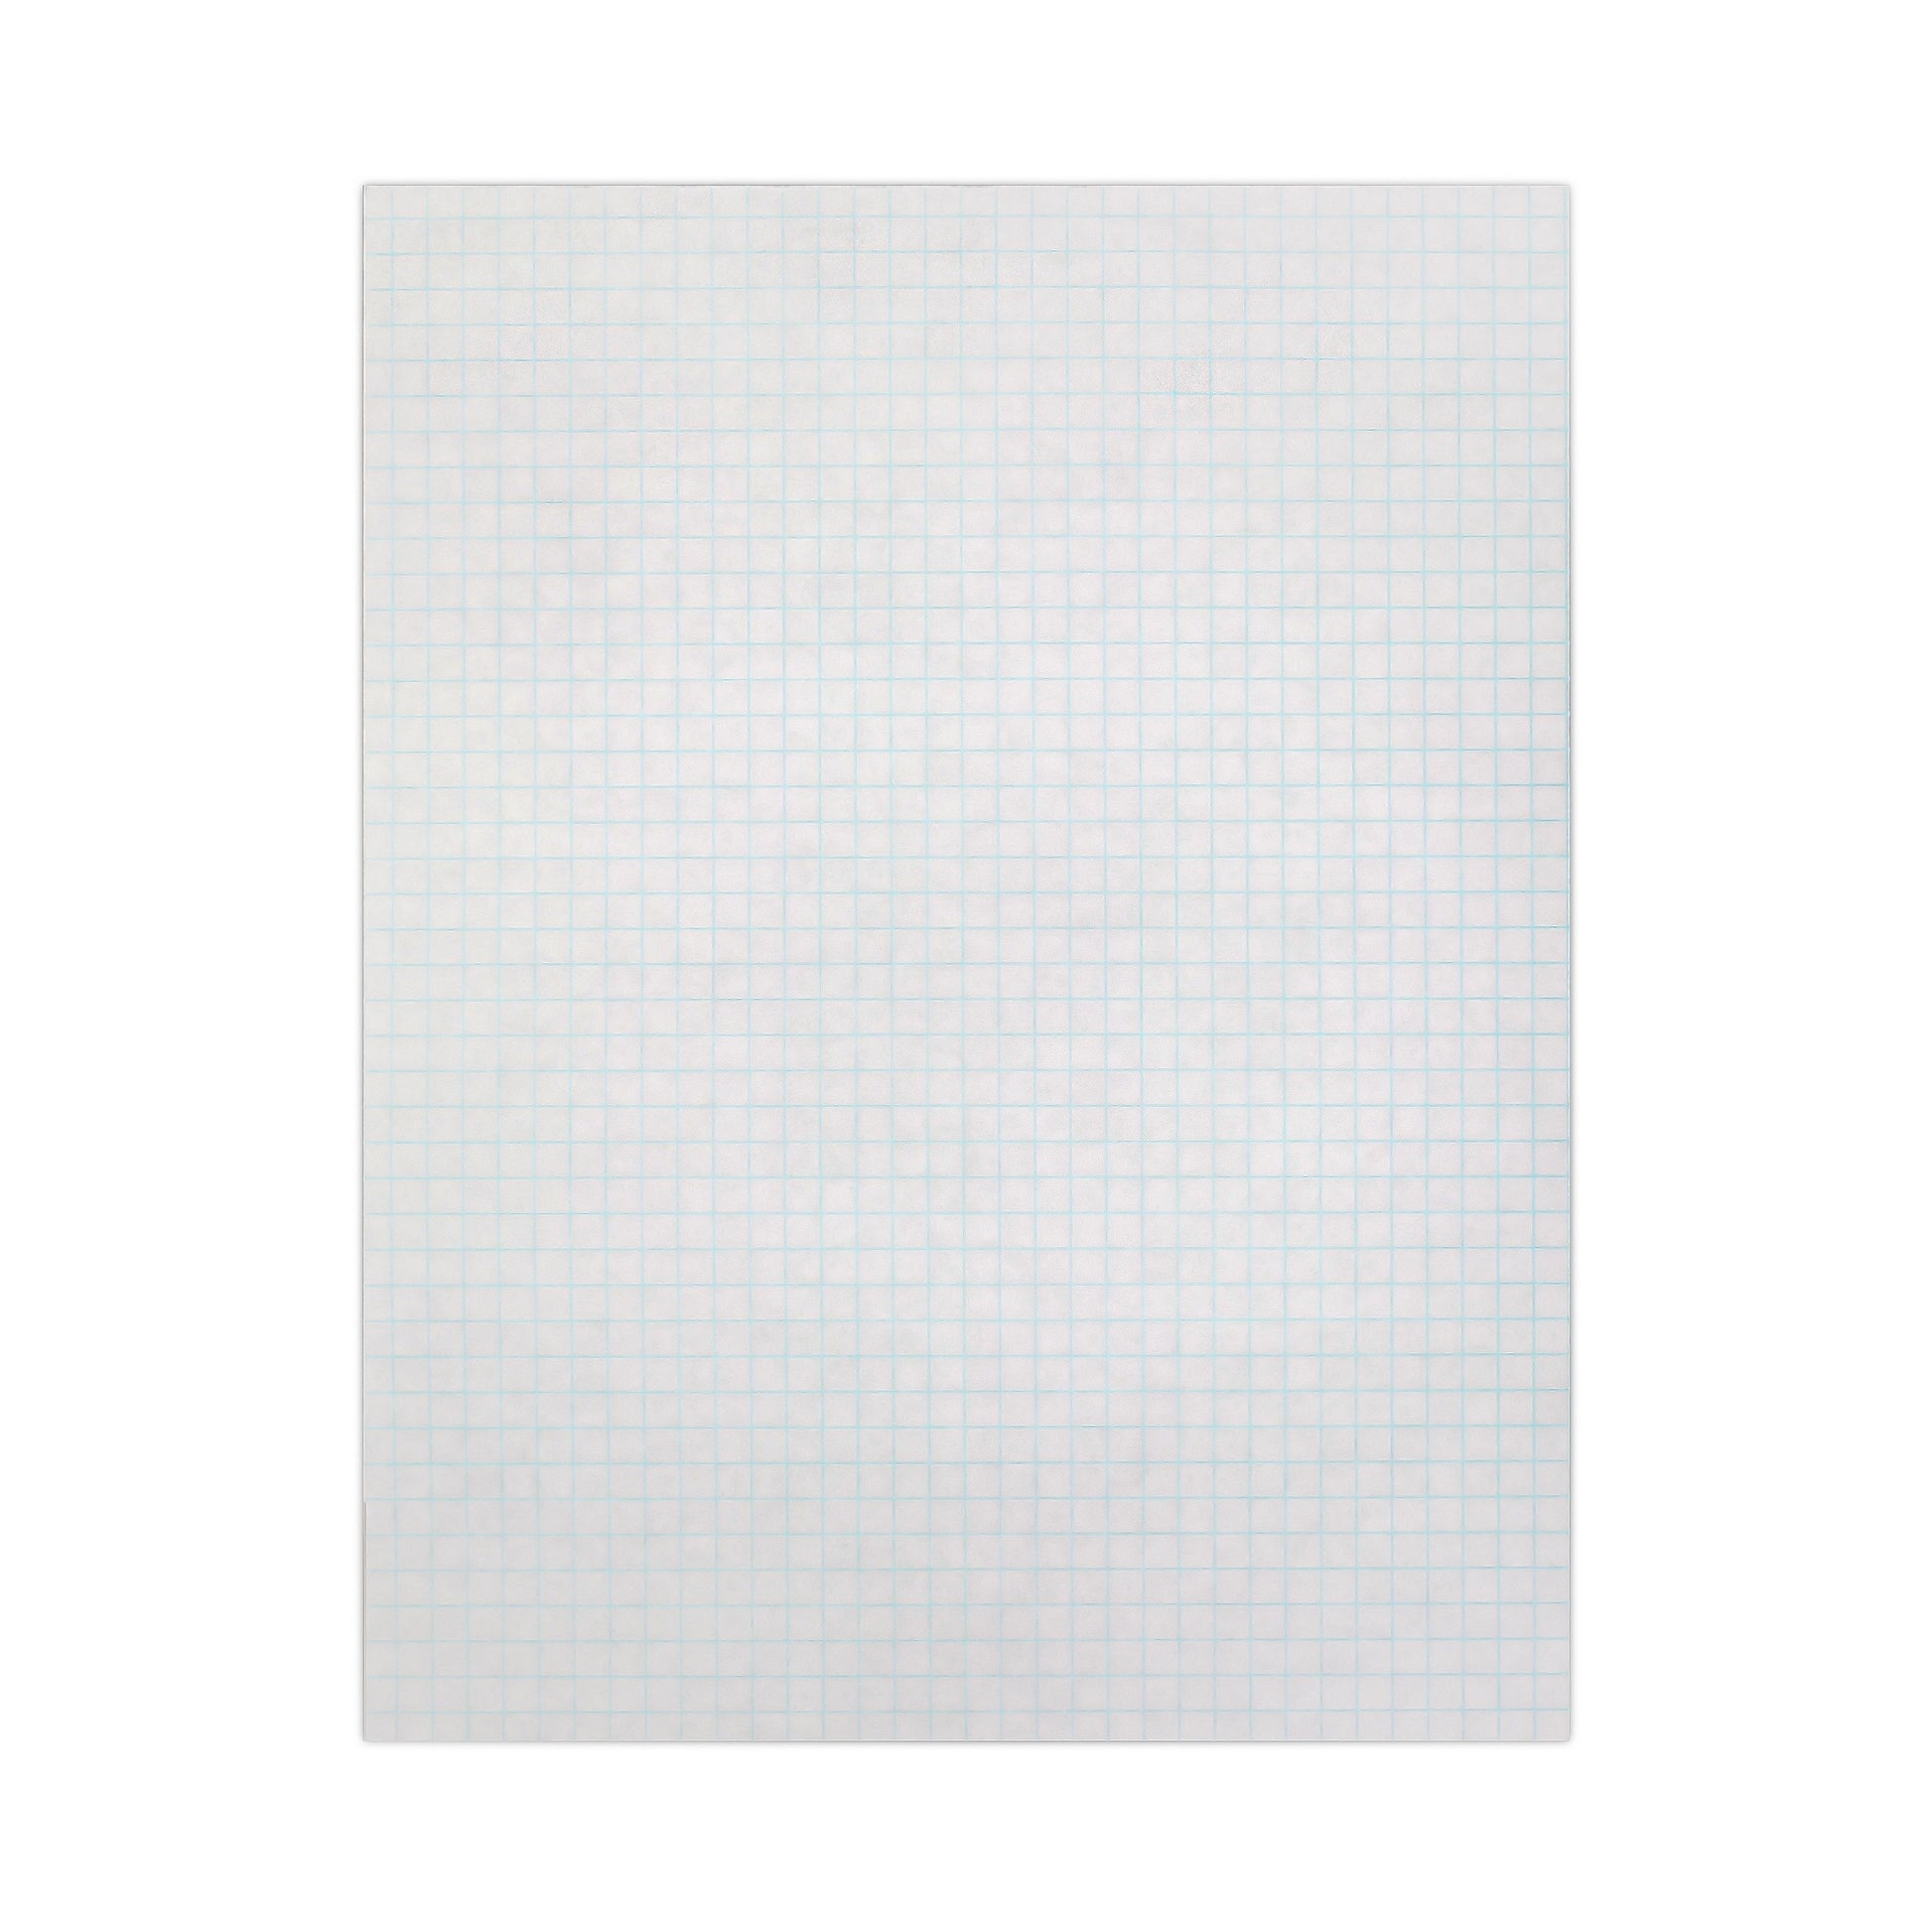 Alvin 1432-1 Quadrille Paper 4x4 Grid 50-Sheet Pad 8.5 x 11